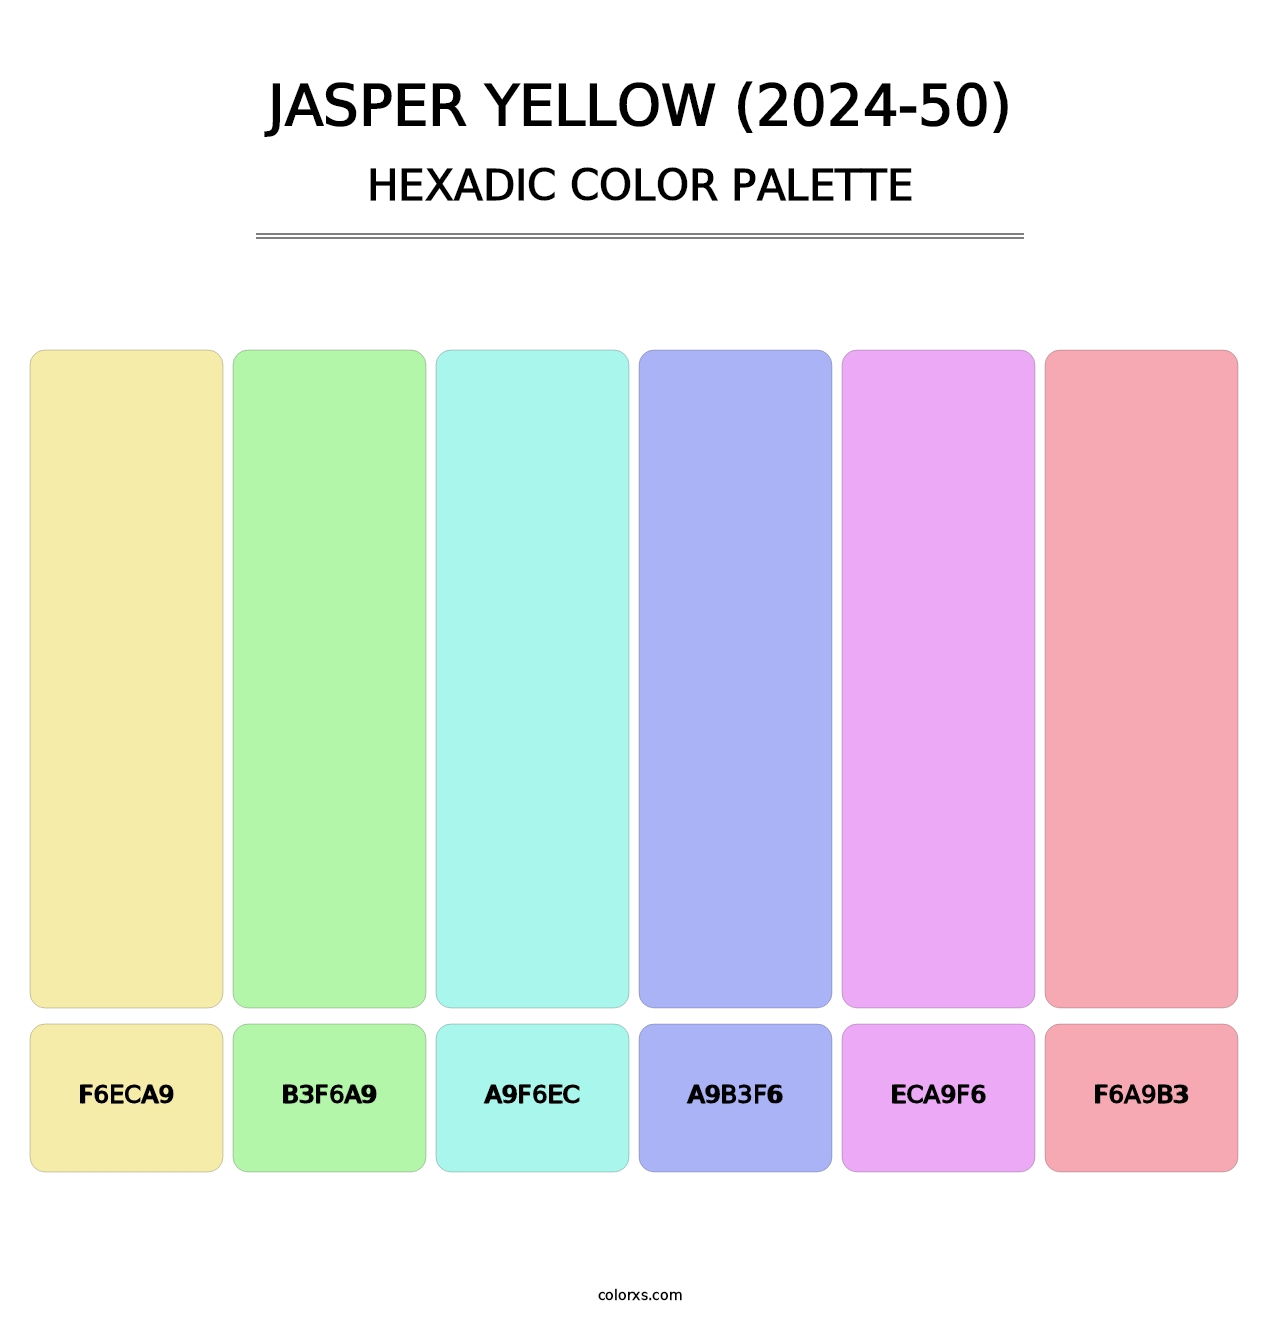 Jasper Yellow (2024-50) - Hexadic Color Palette